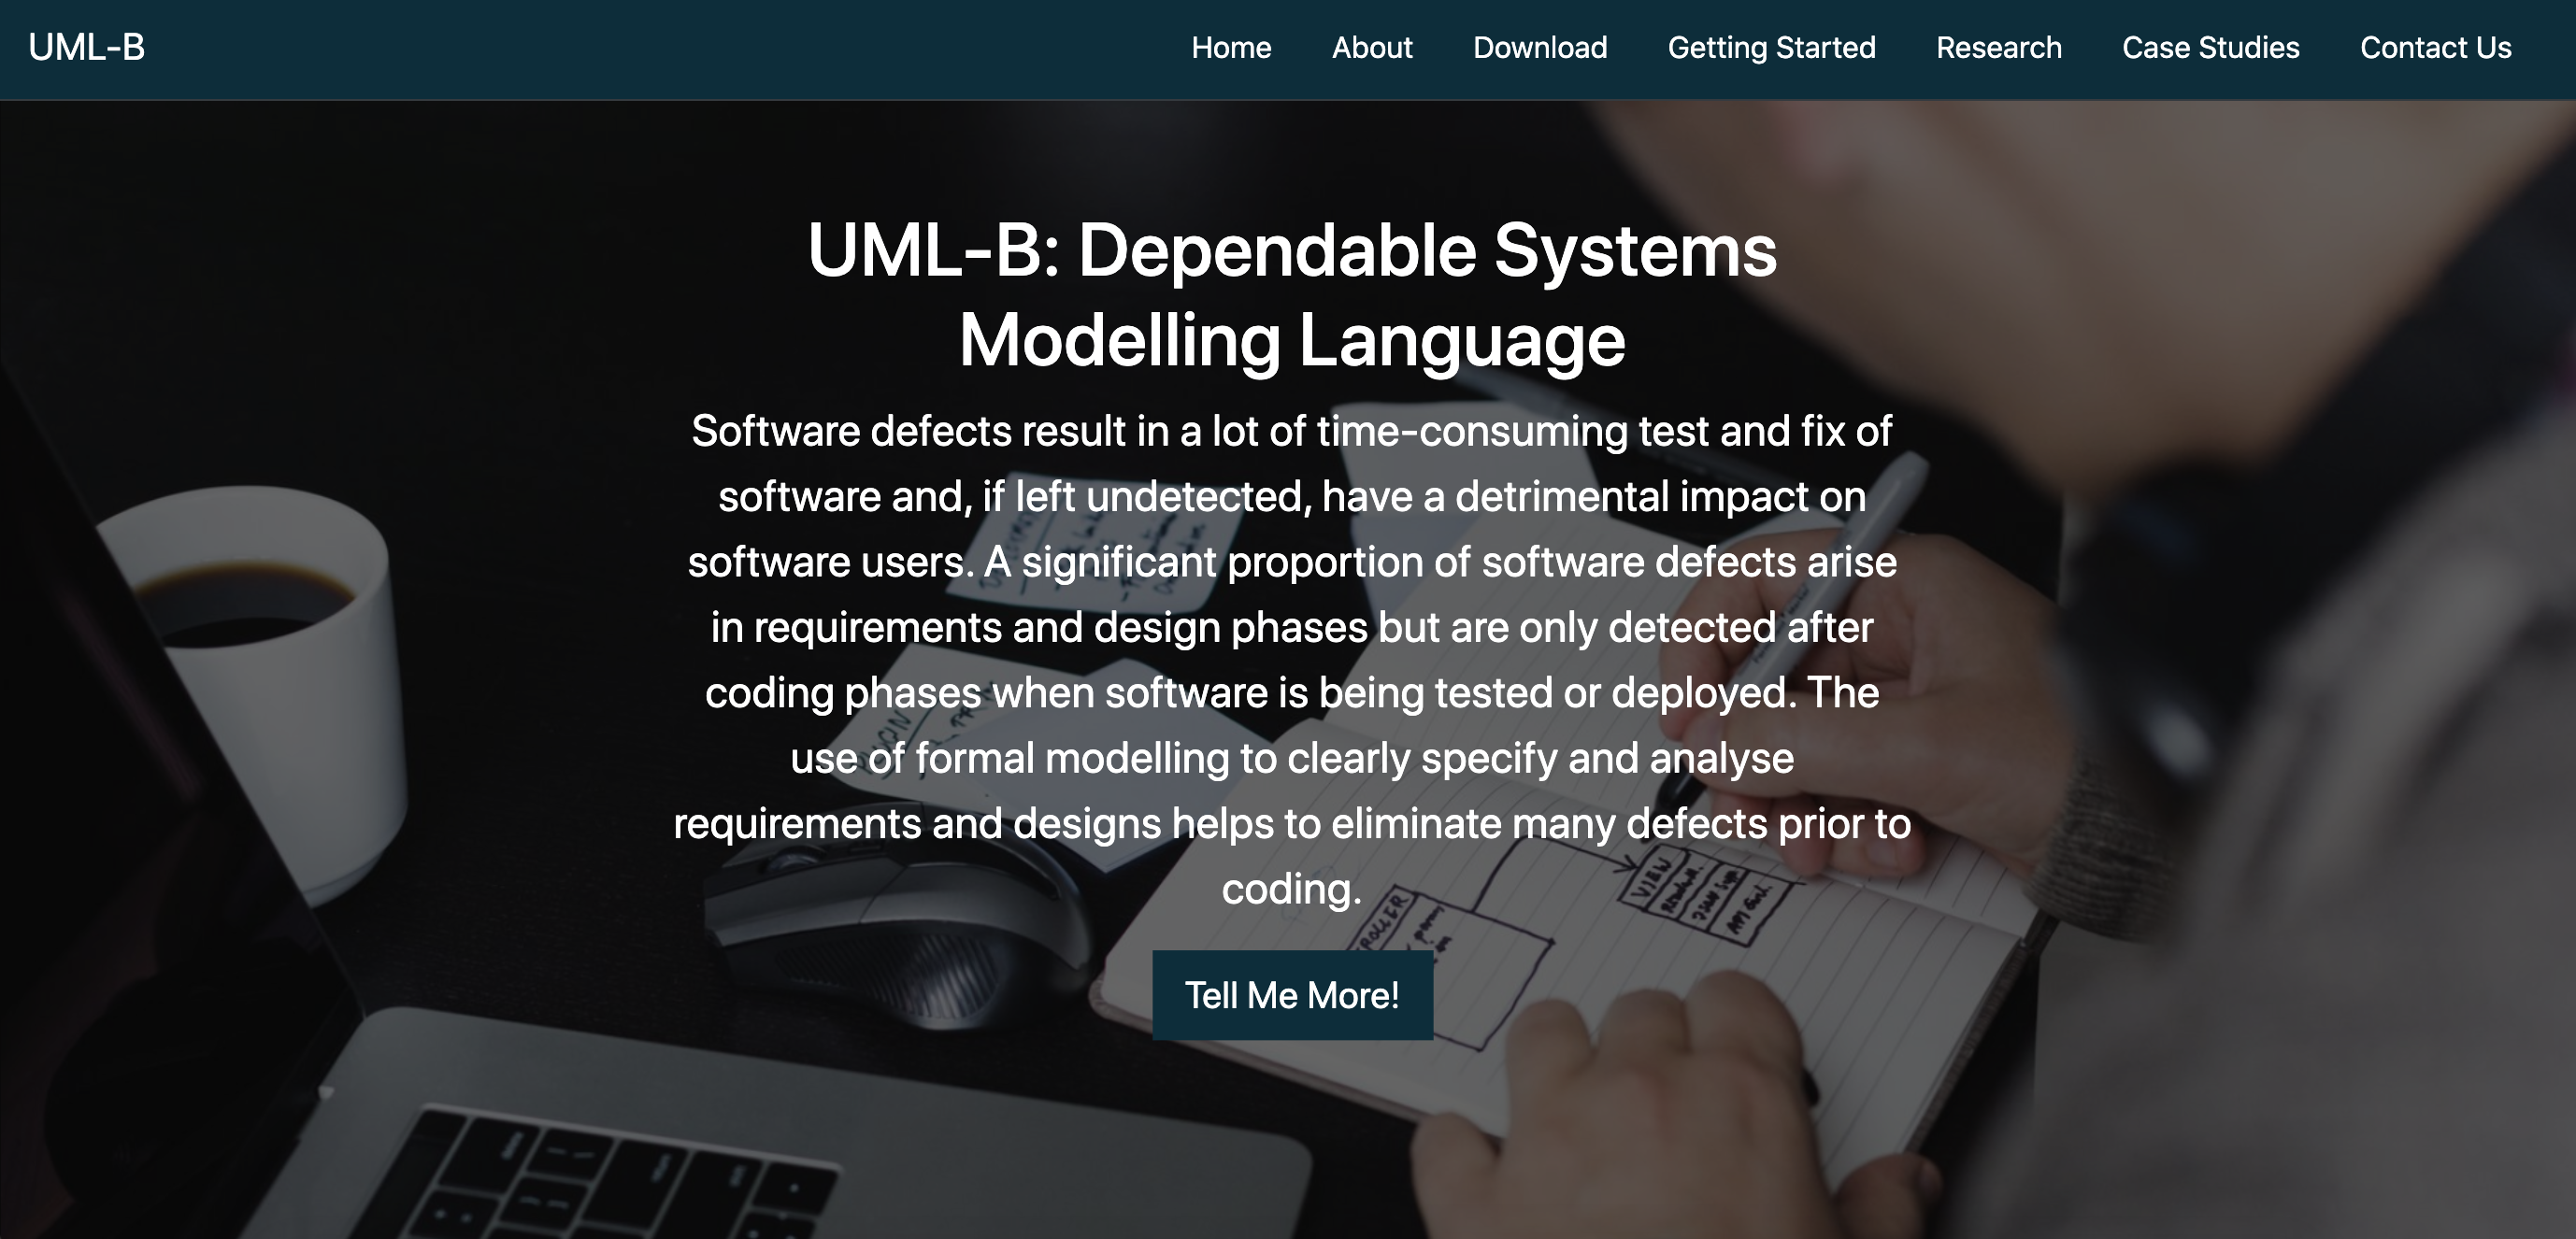 uml-b website